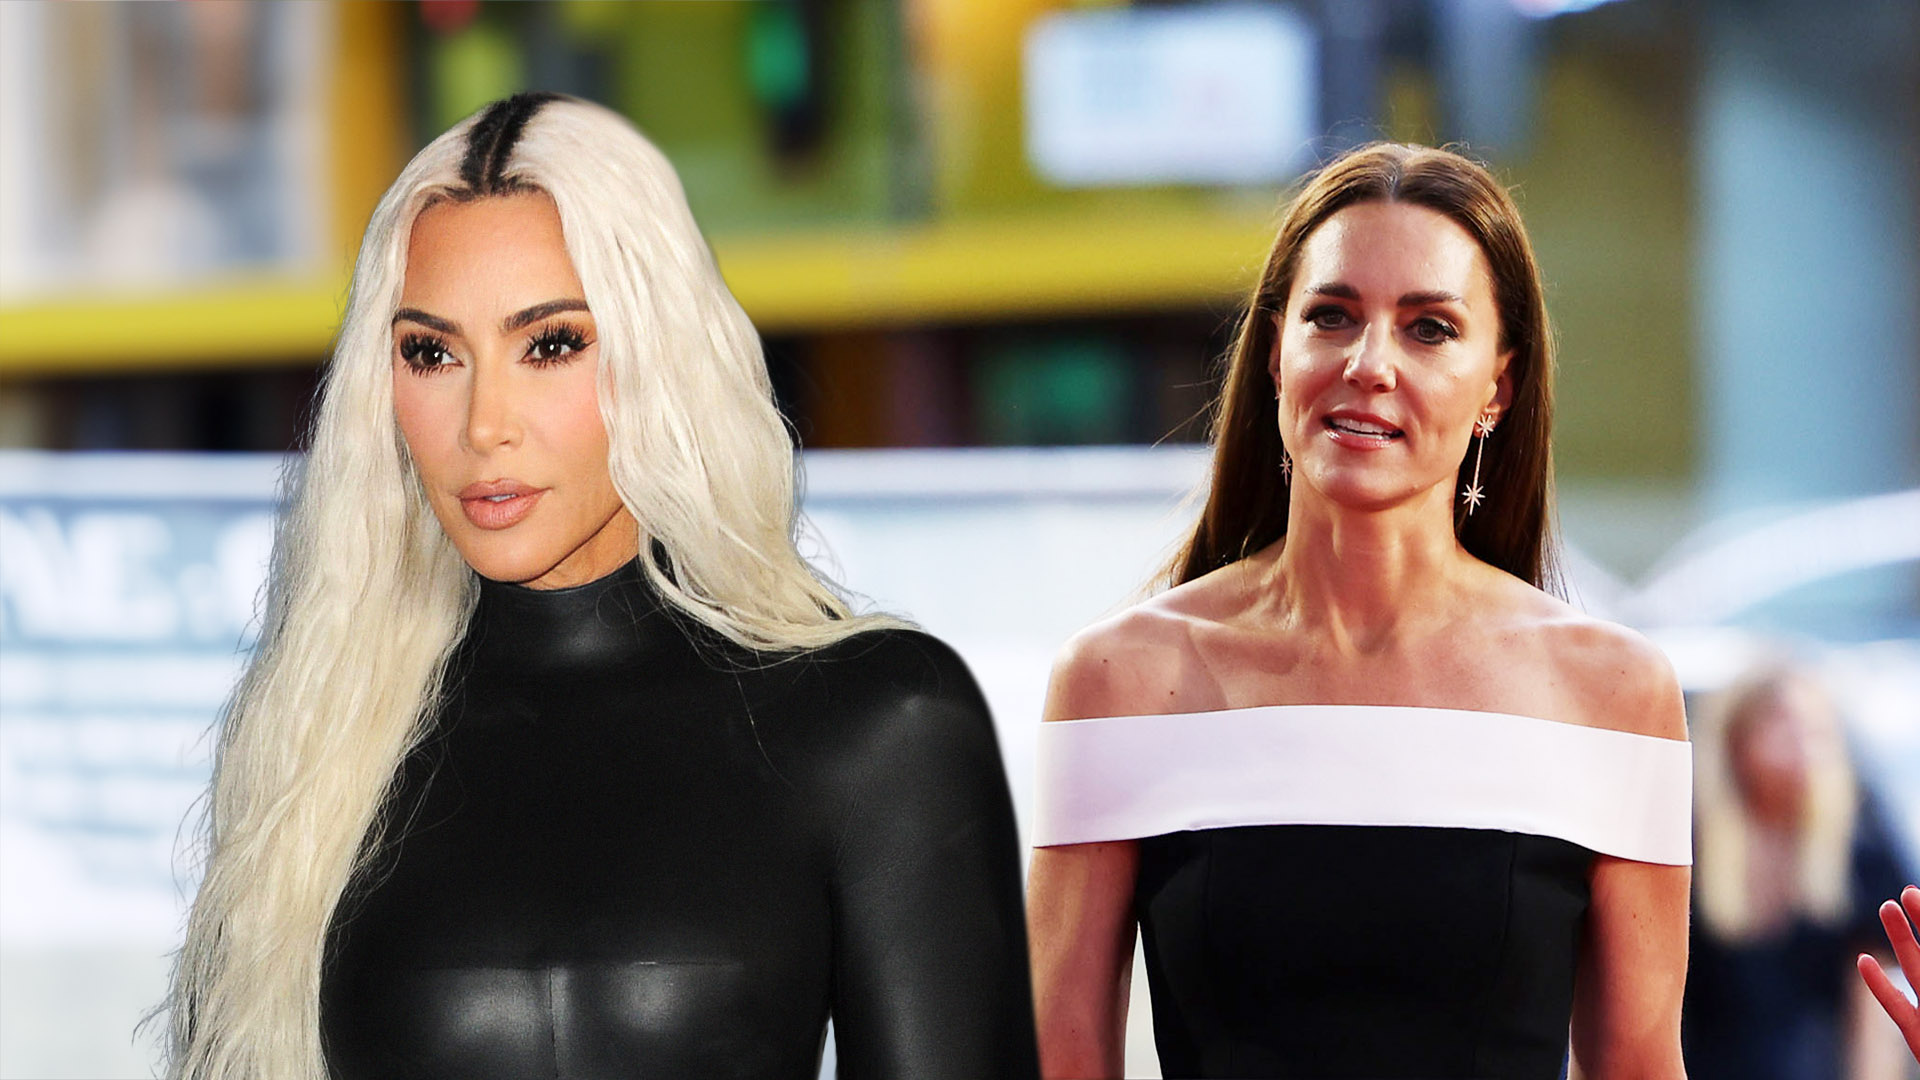 Fans Just Now Realizing Kim Kardashian & Kate Middleton Are the Same Age